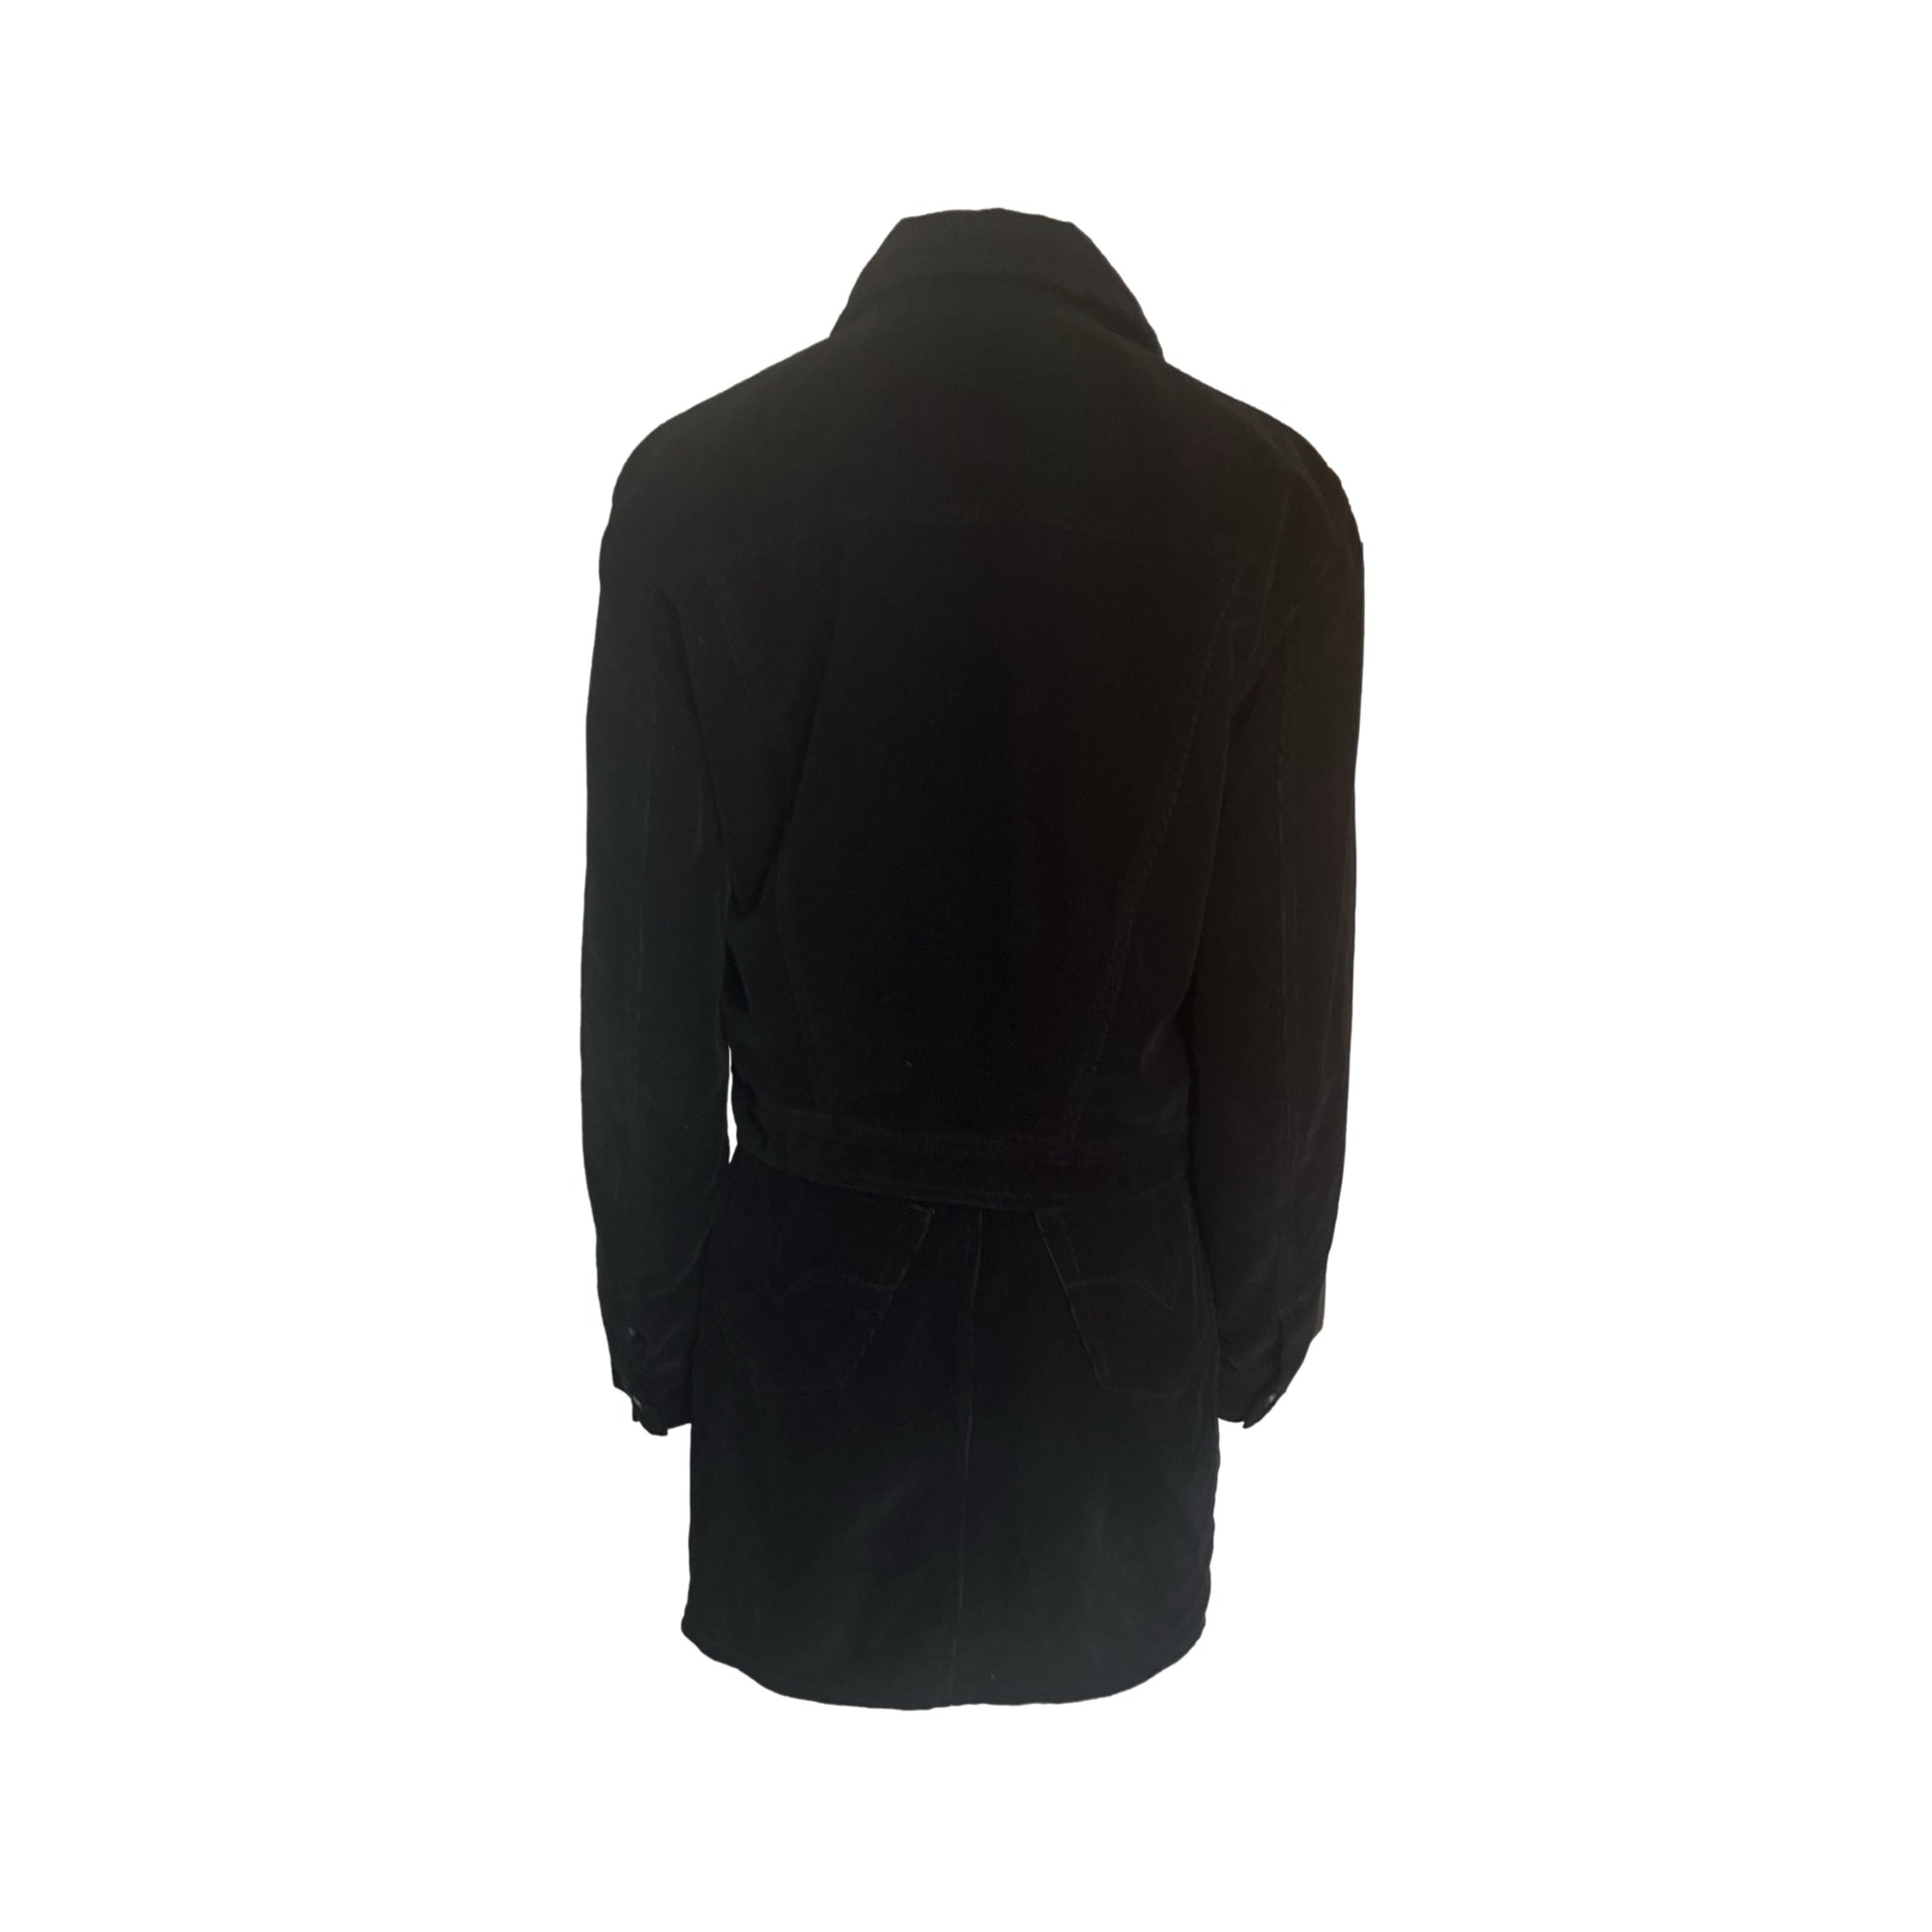 Versace Black Corduroy Skirt Set - Apparel